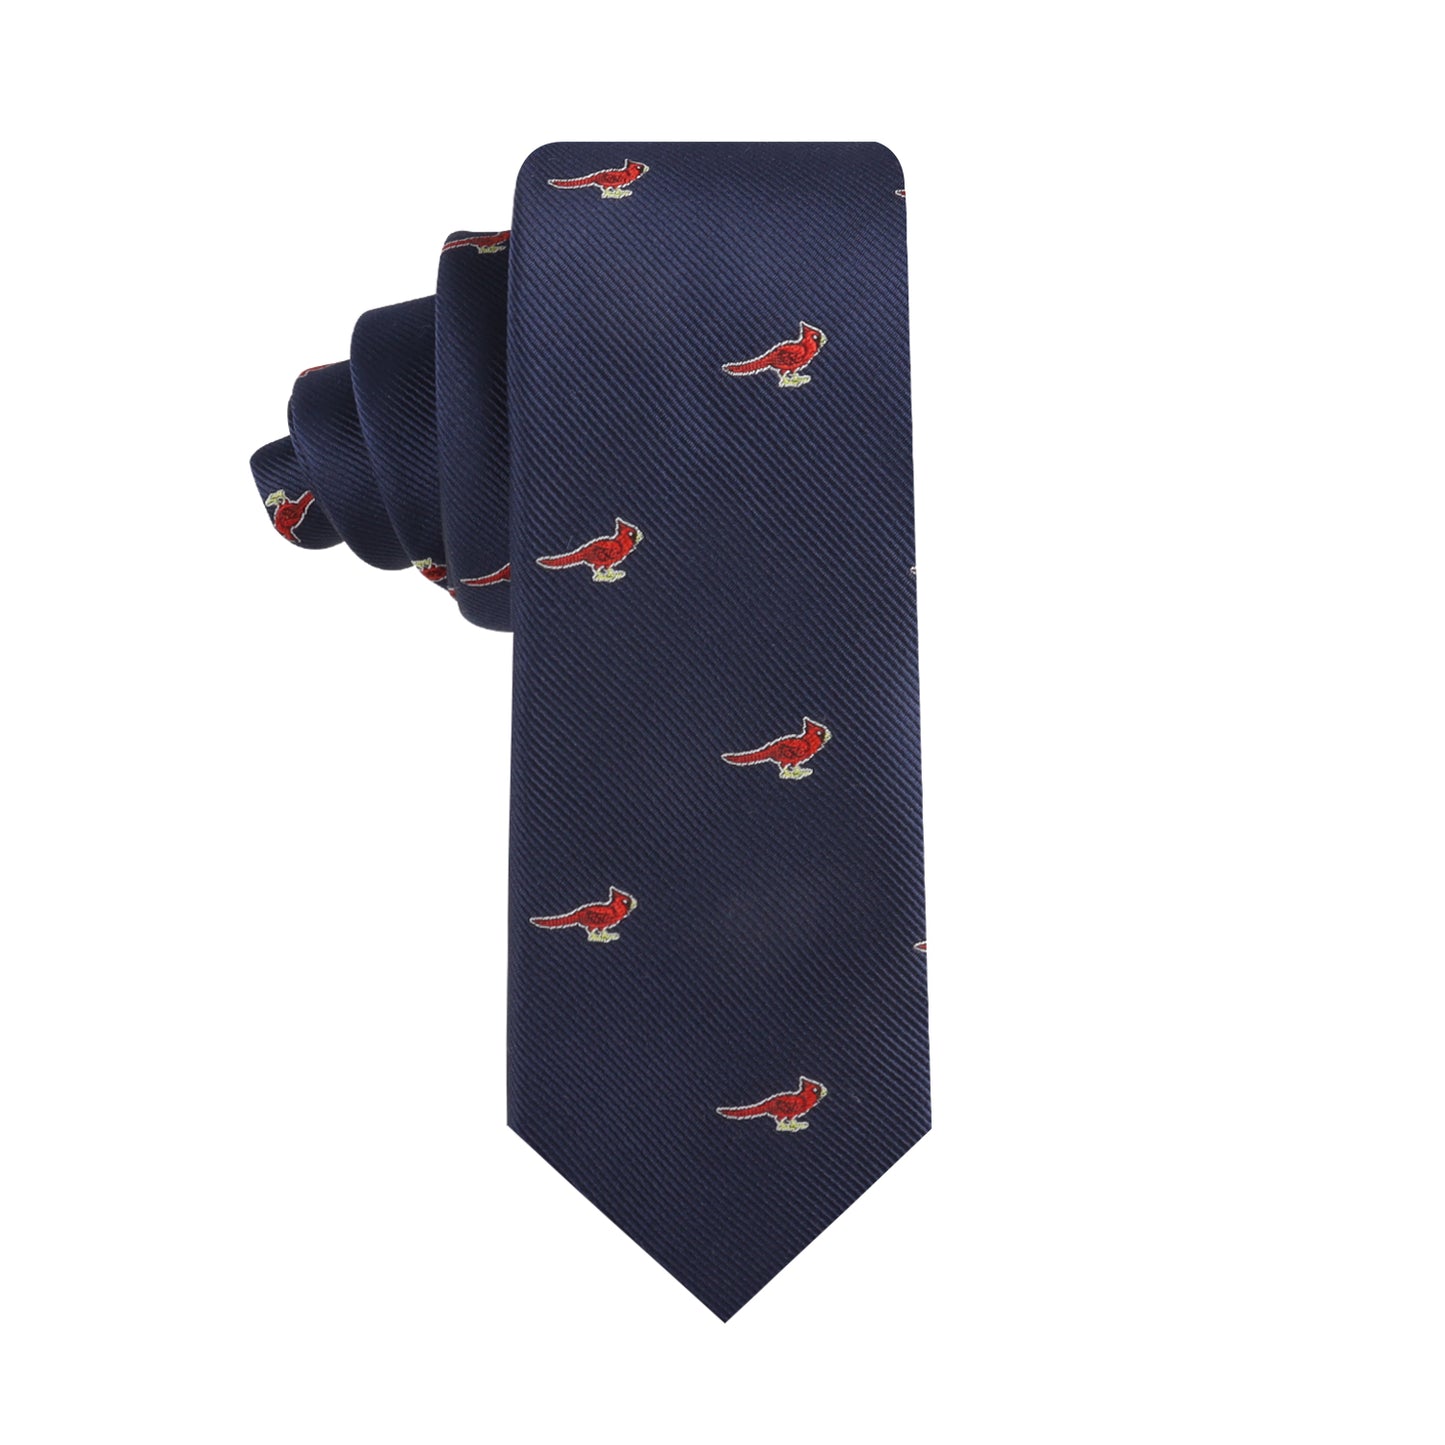 A Cardinal Bird Skinny Tie, adding a touch of vivid elegance.